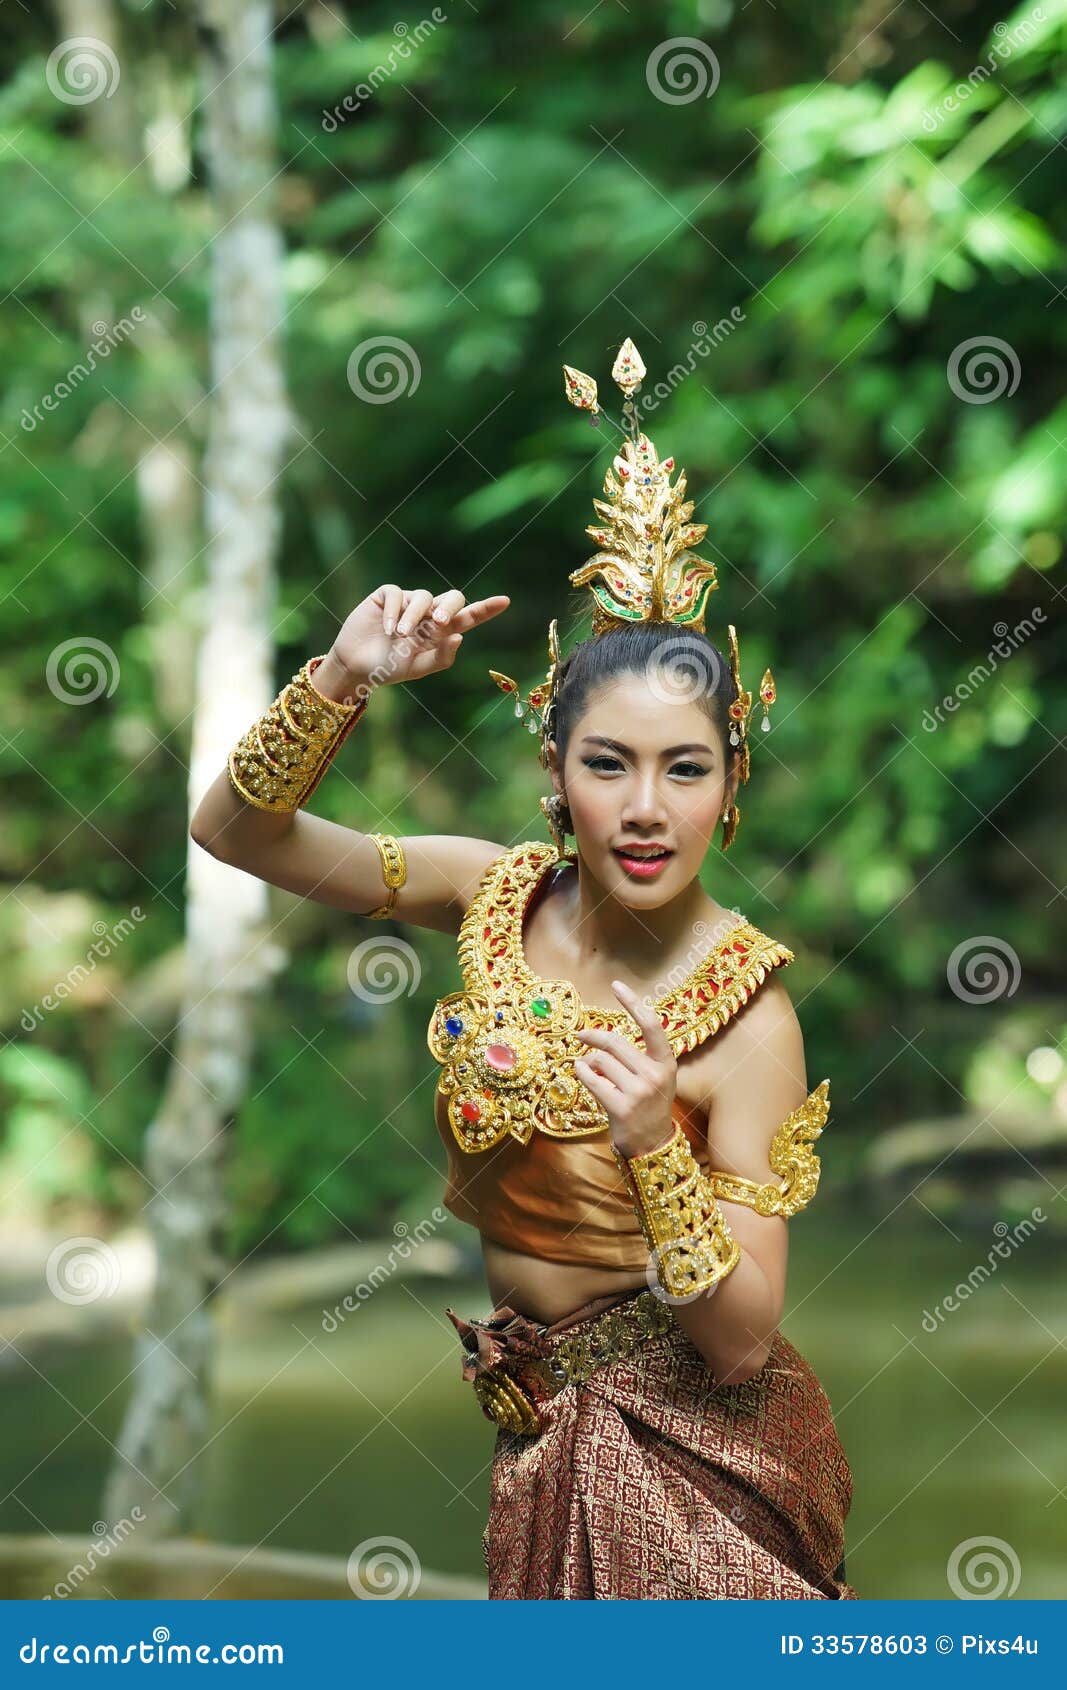 beautiful-thai-lady-thai-traditional-drama-dress-posing-forest-greenery-background-model-ethnicity-33578603.jpg